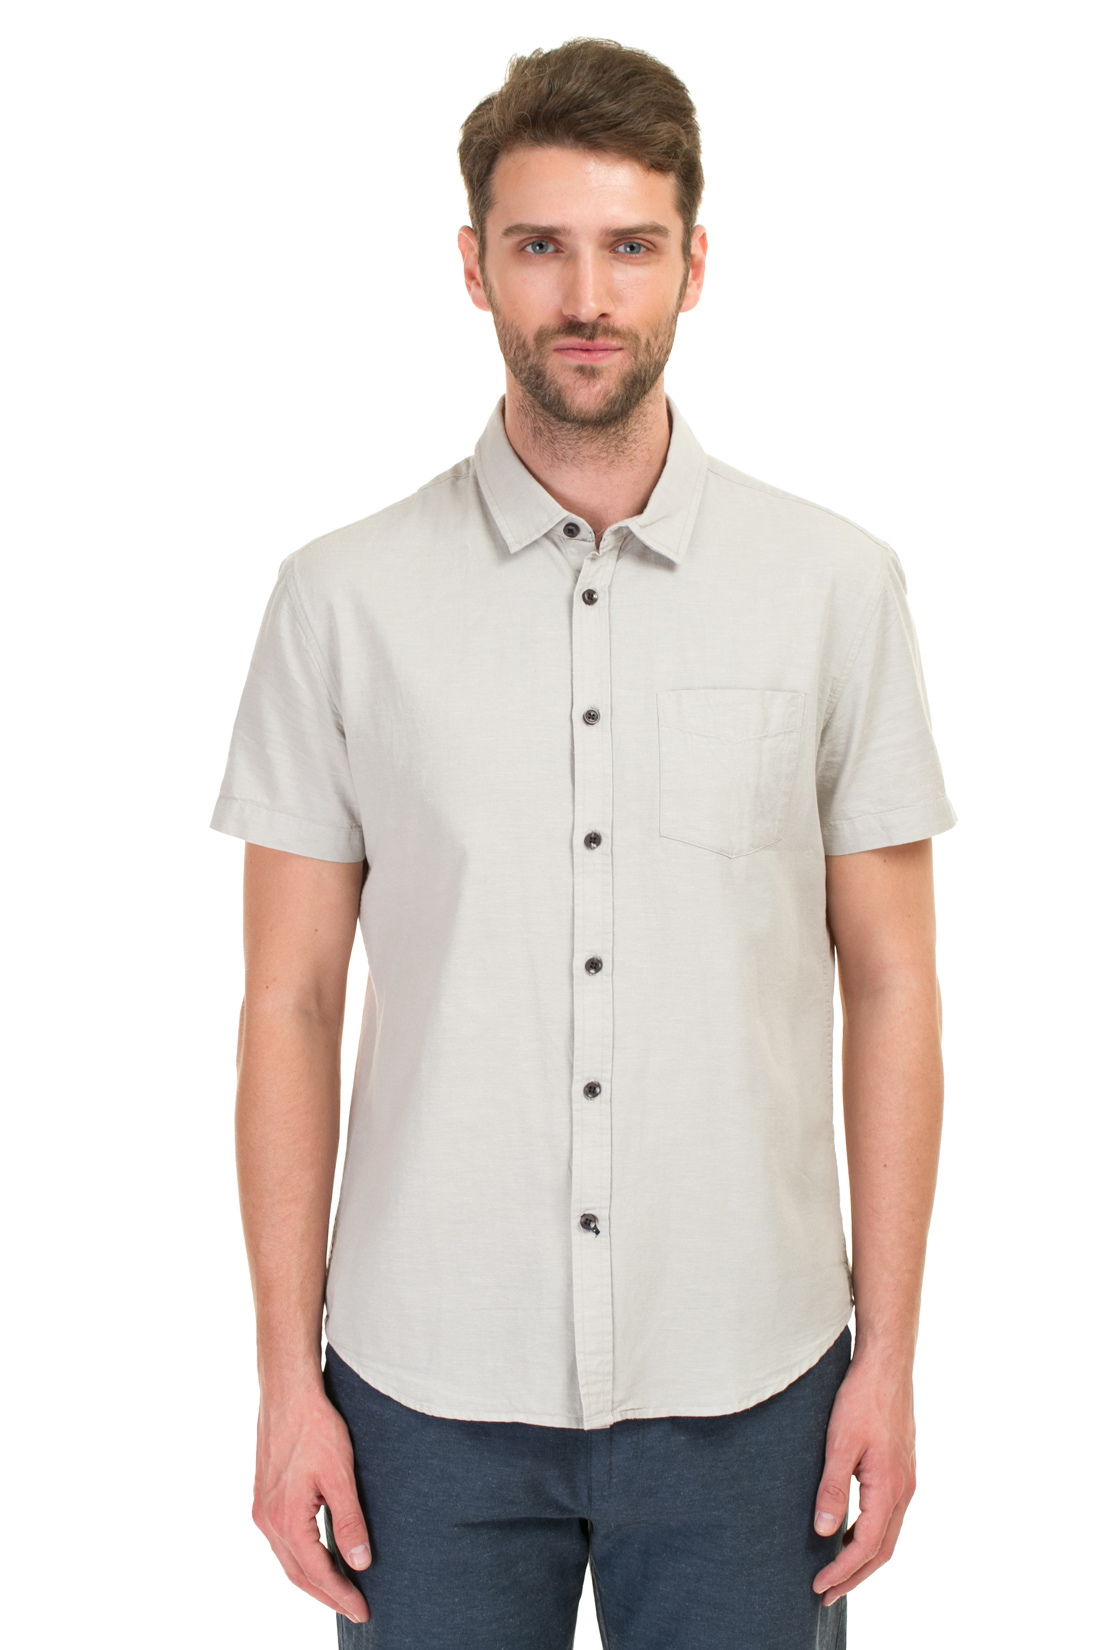 Рубашка с волокнами льна (арт. baon B687013), размер XXL, цвет серый